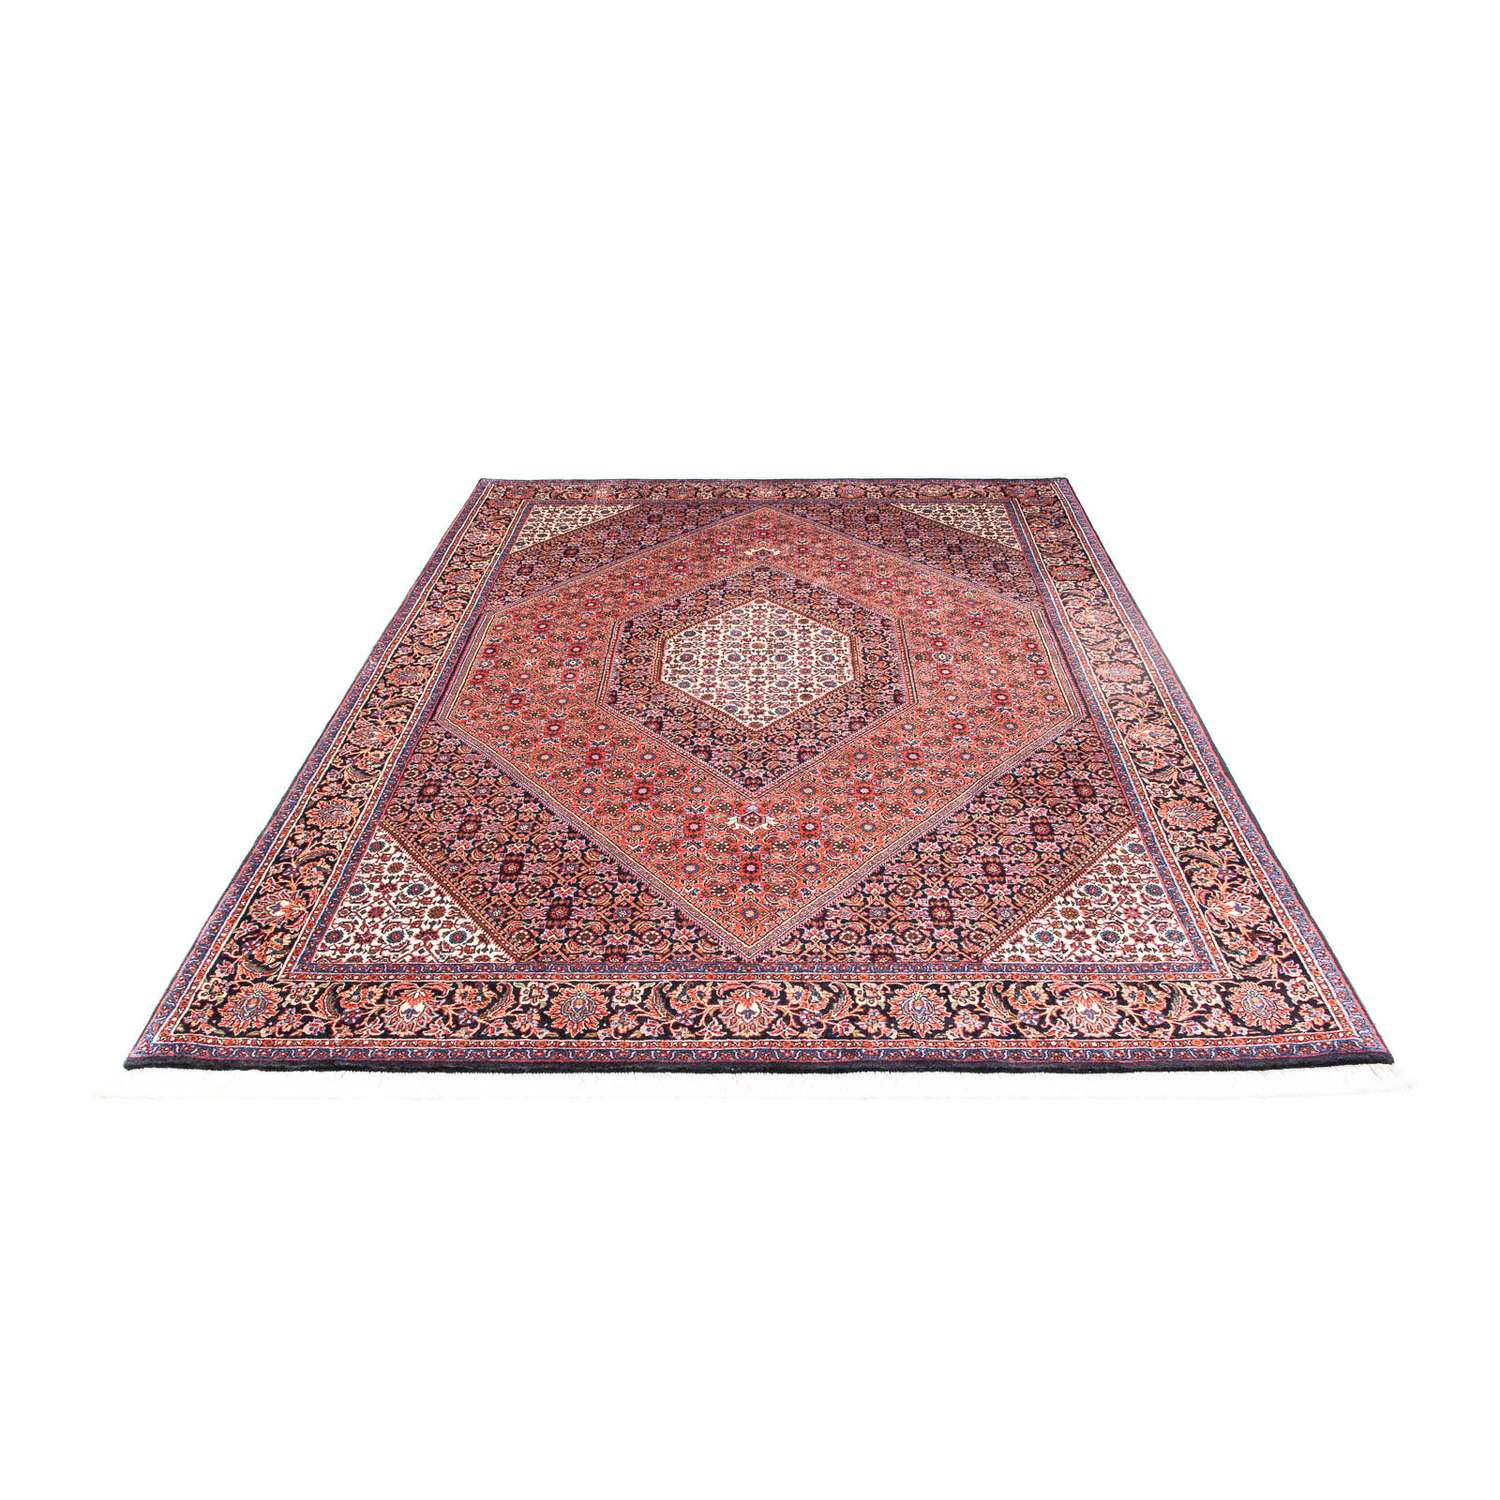 Persisk teppe - Bijar - 230 x 168 cm - lys rød